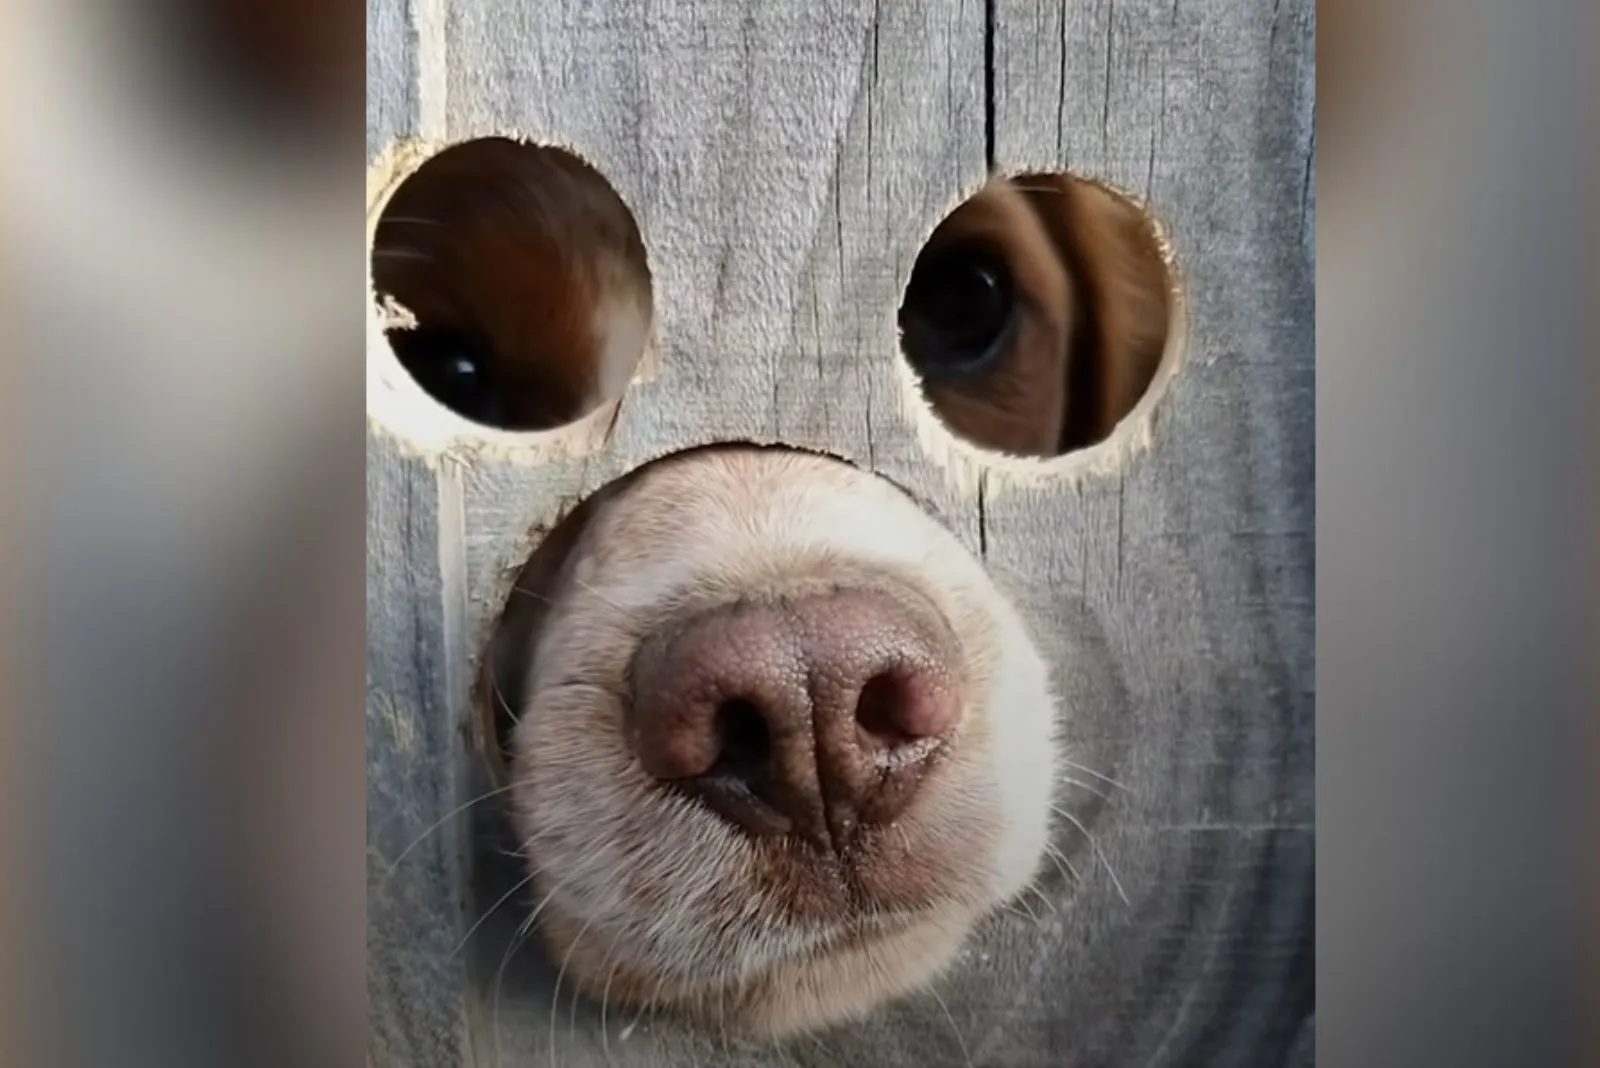 the dog peeks through the peephole